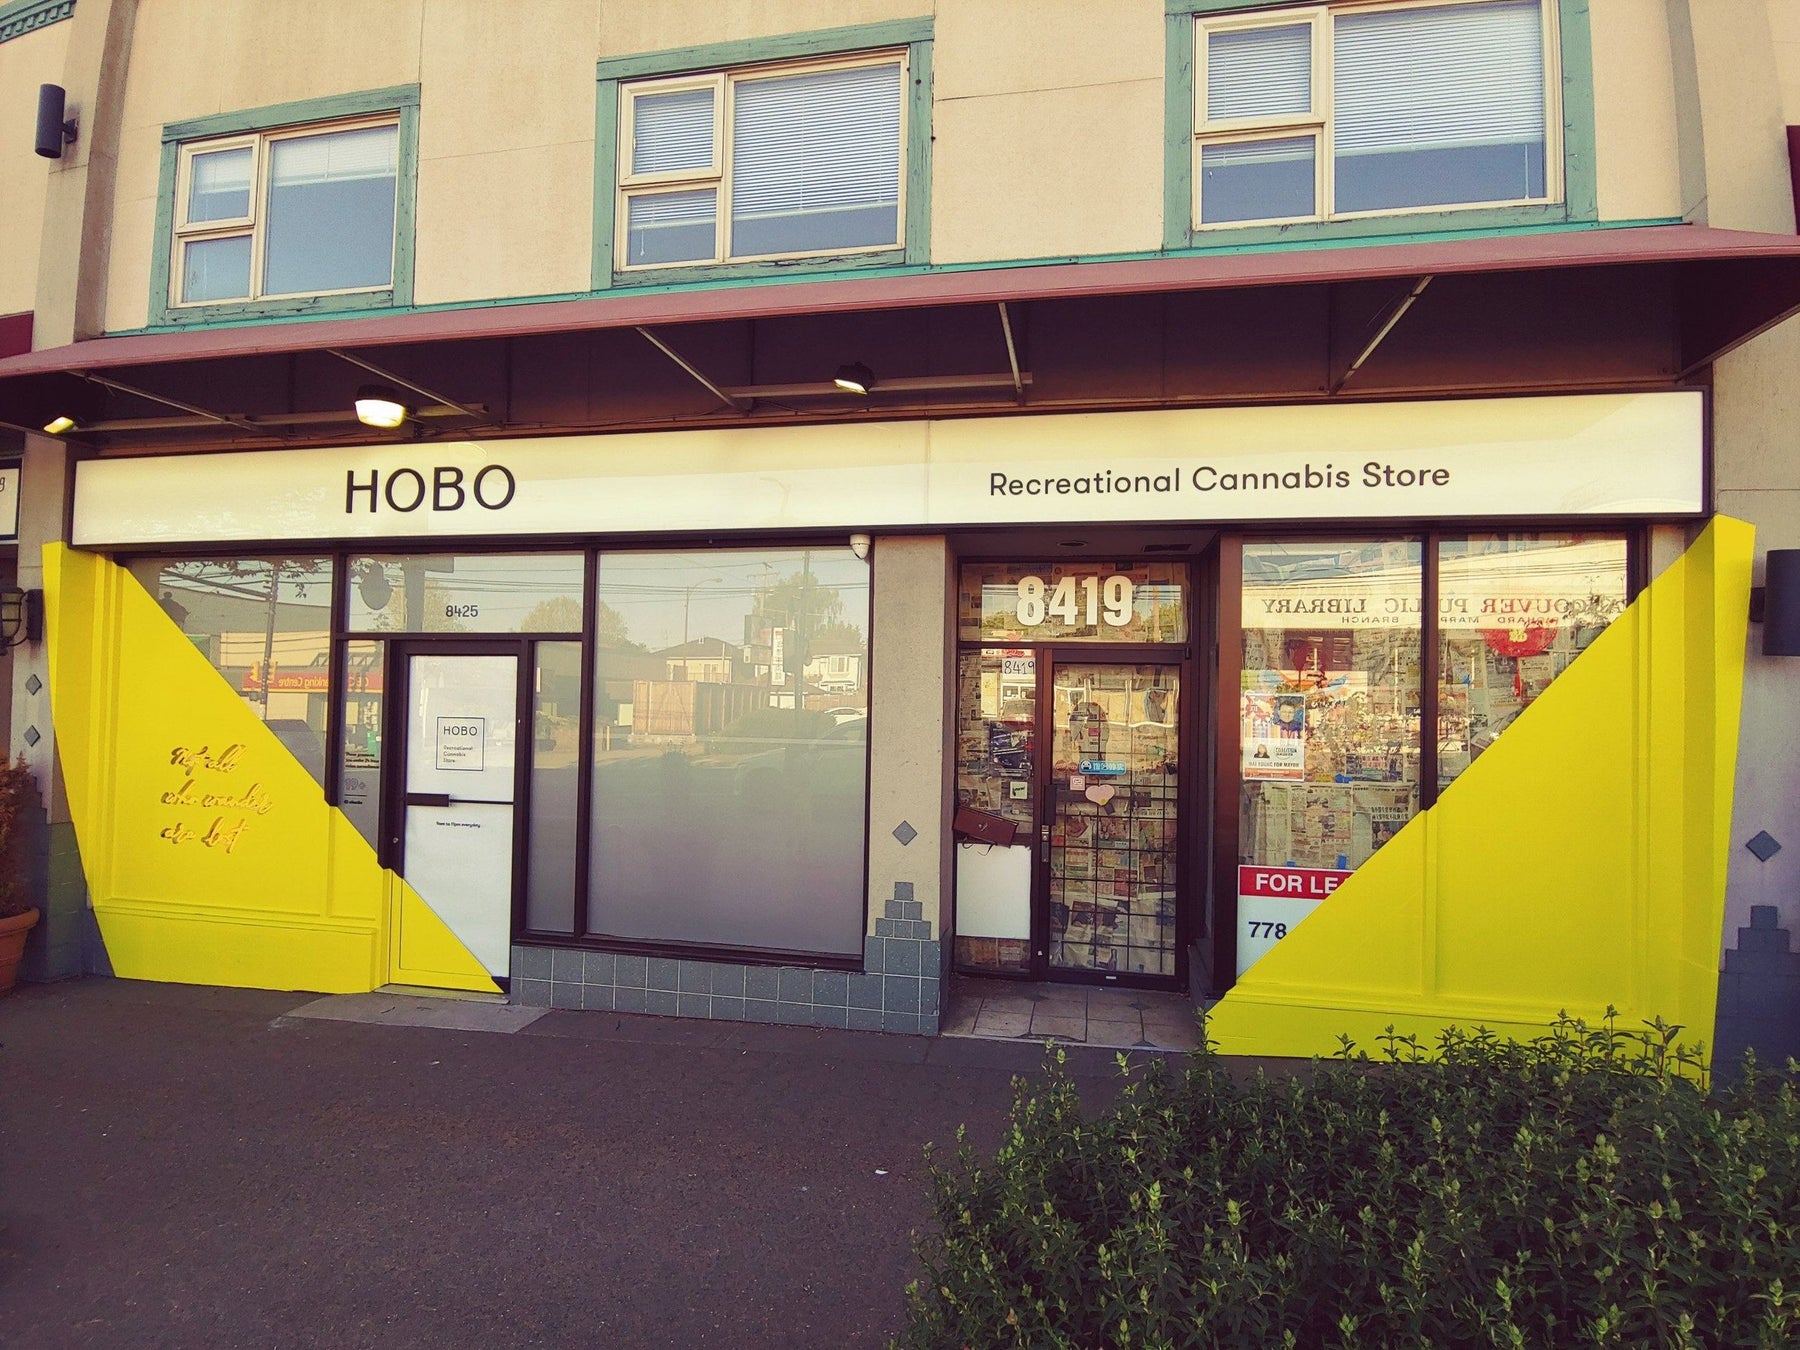 Hobo - recreational cannabis store